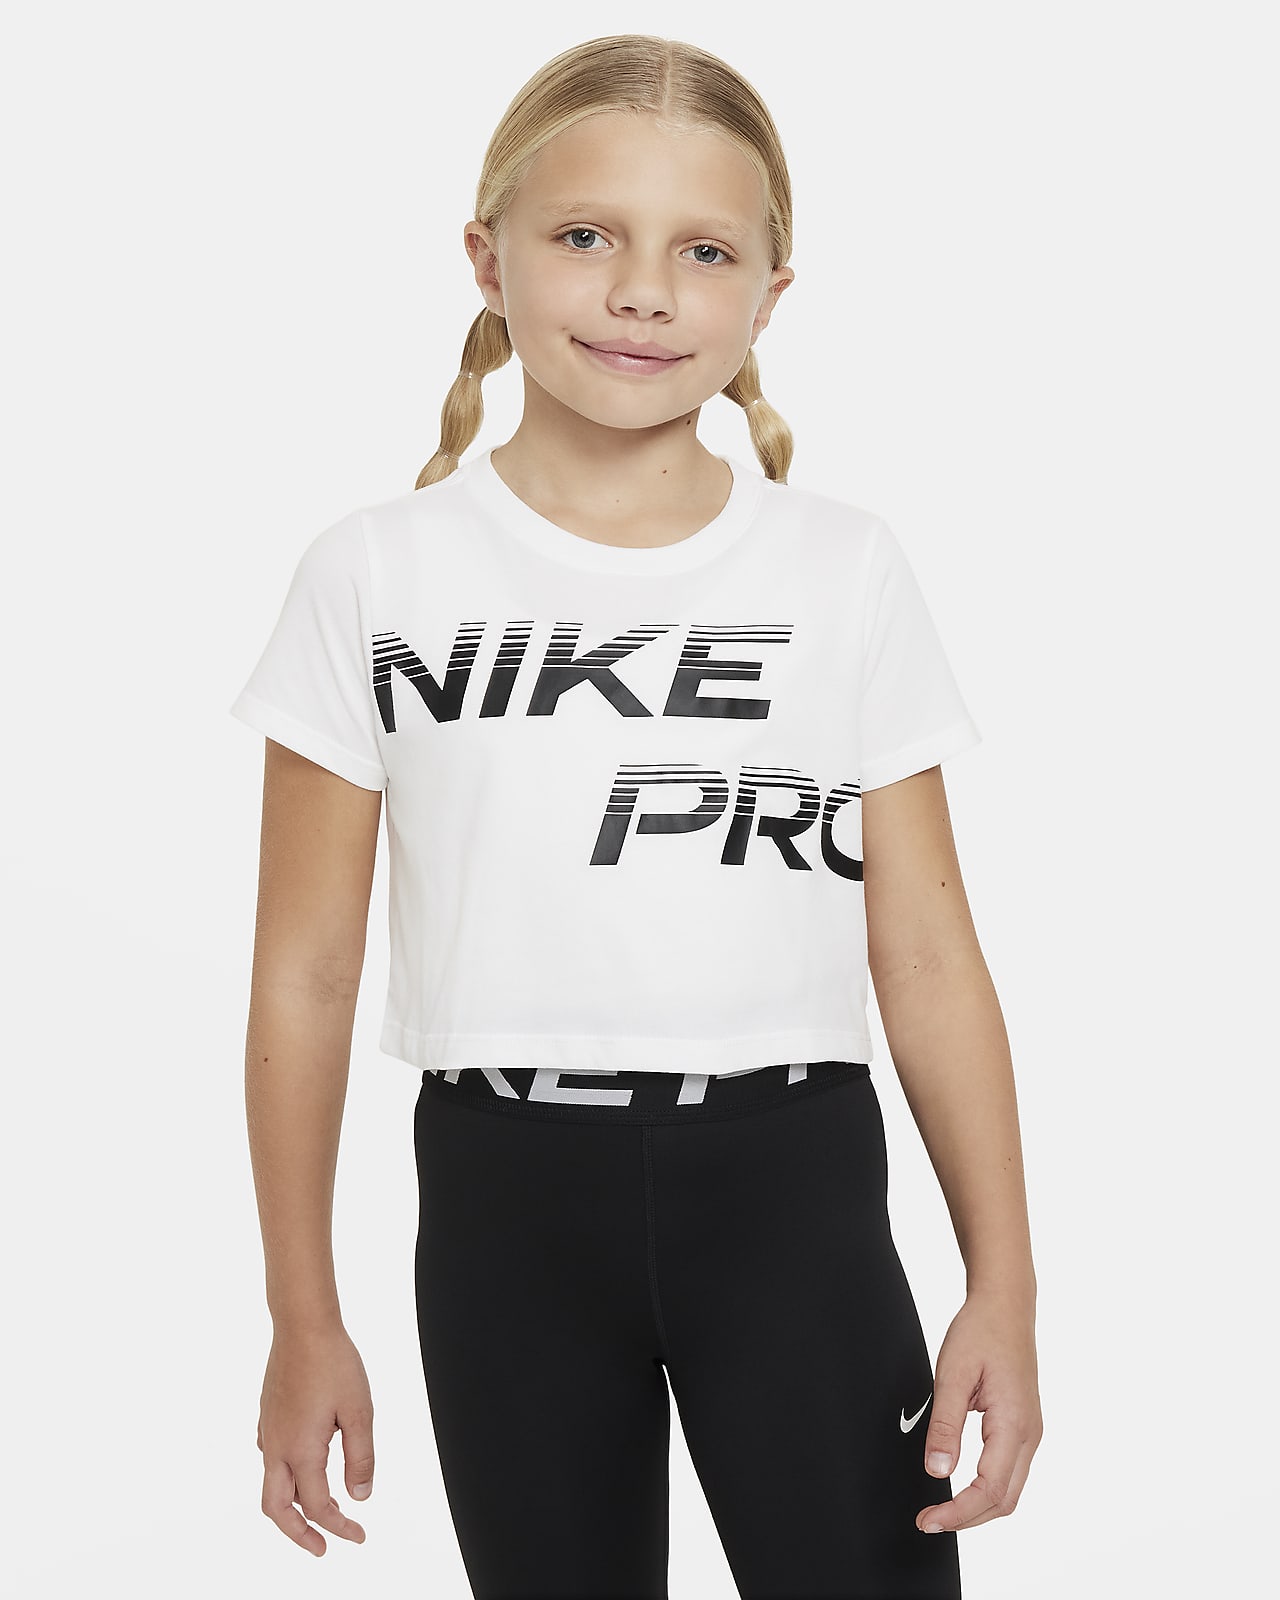 Nike Dri-FIT One Older Kids' (Girls') Training Leggings. Nike LU